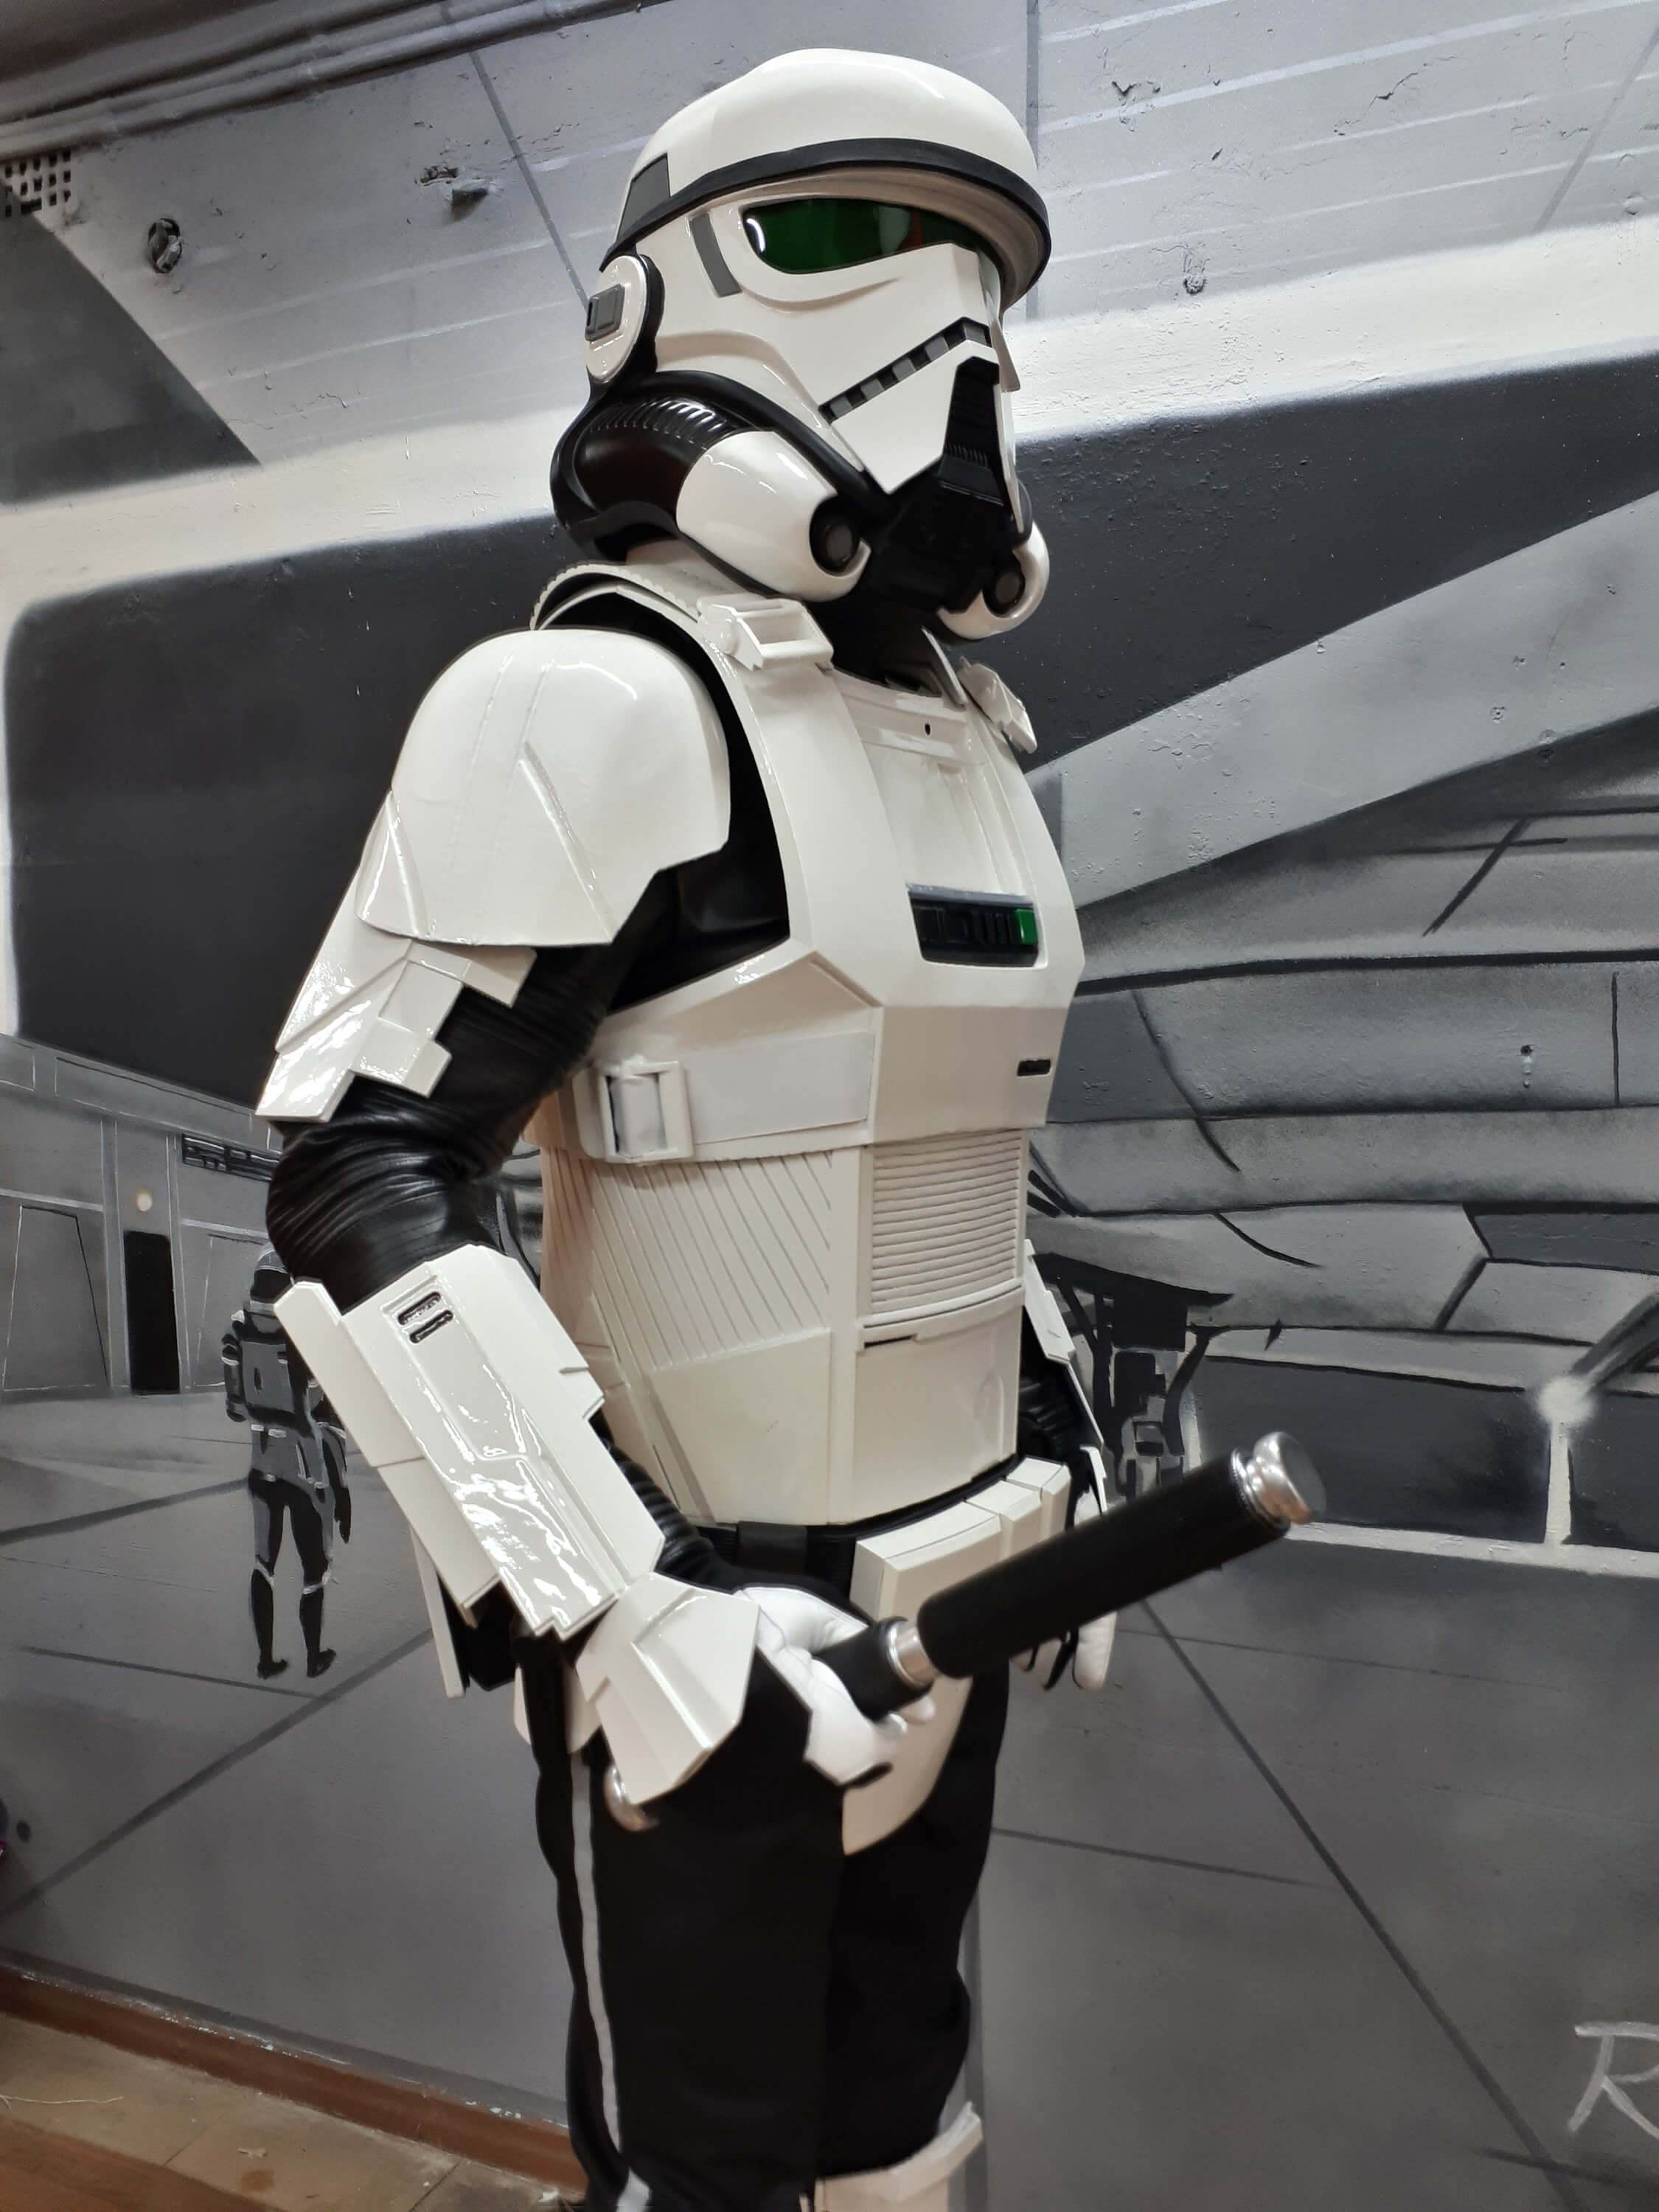 PatrolTrooper Armor